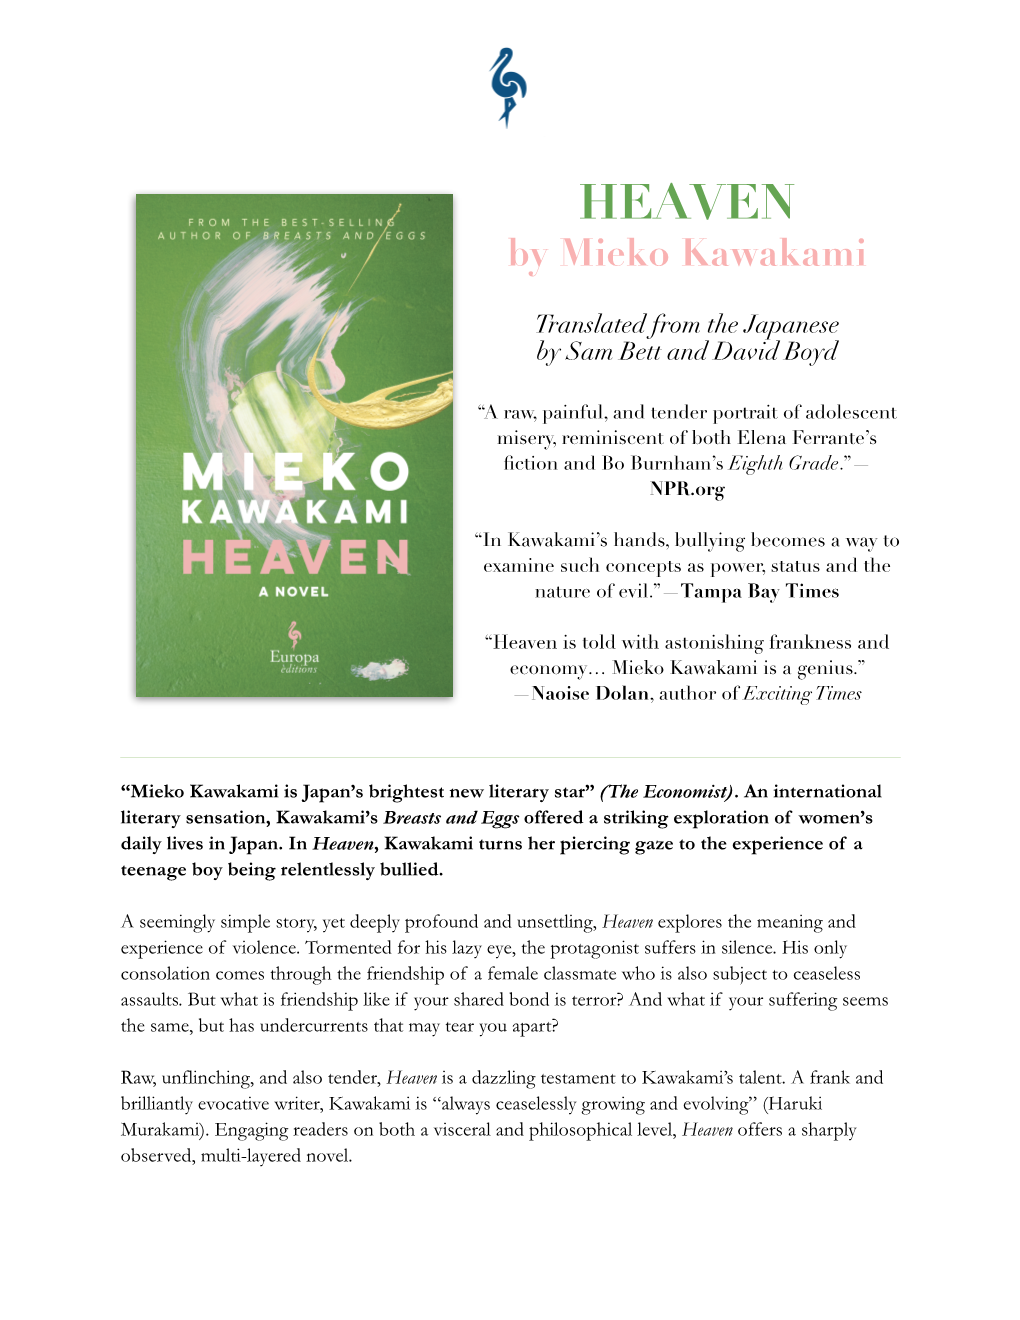 HEAVEN by Mieko Kawakami Translated From